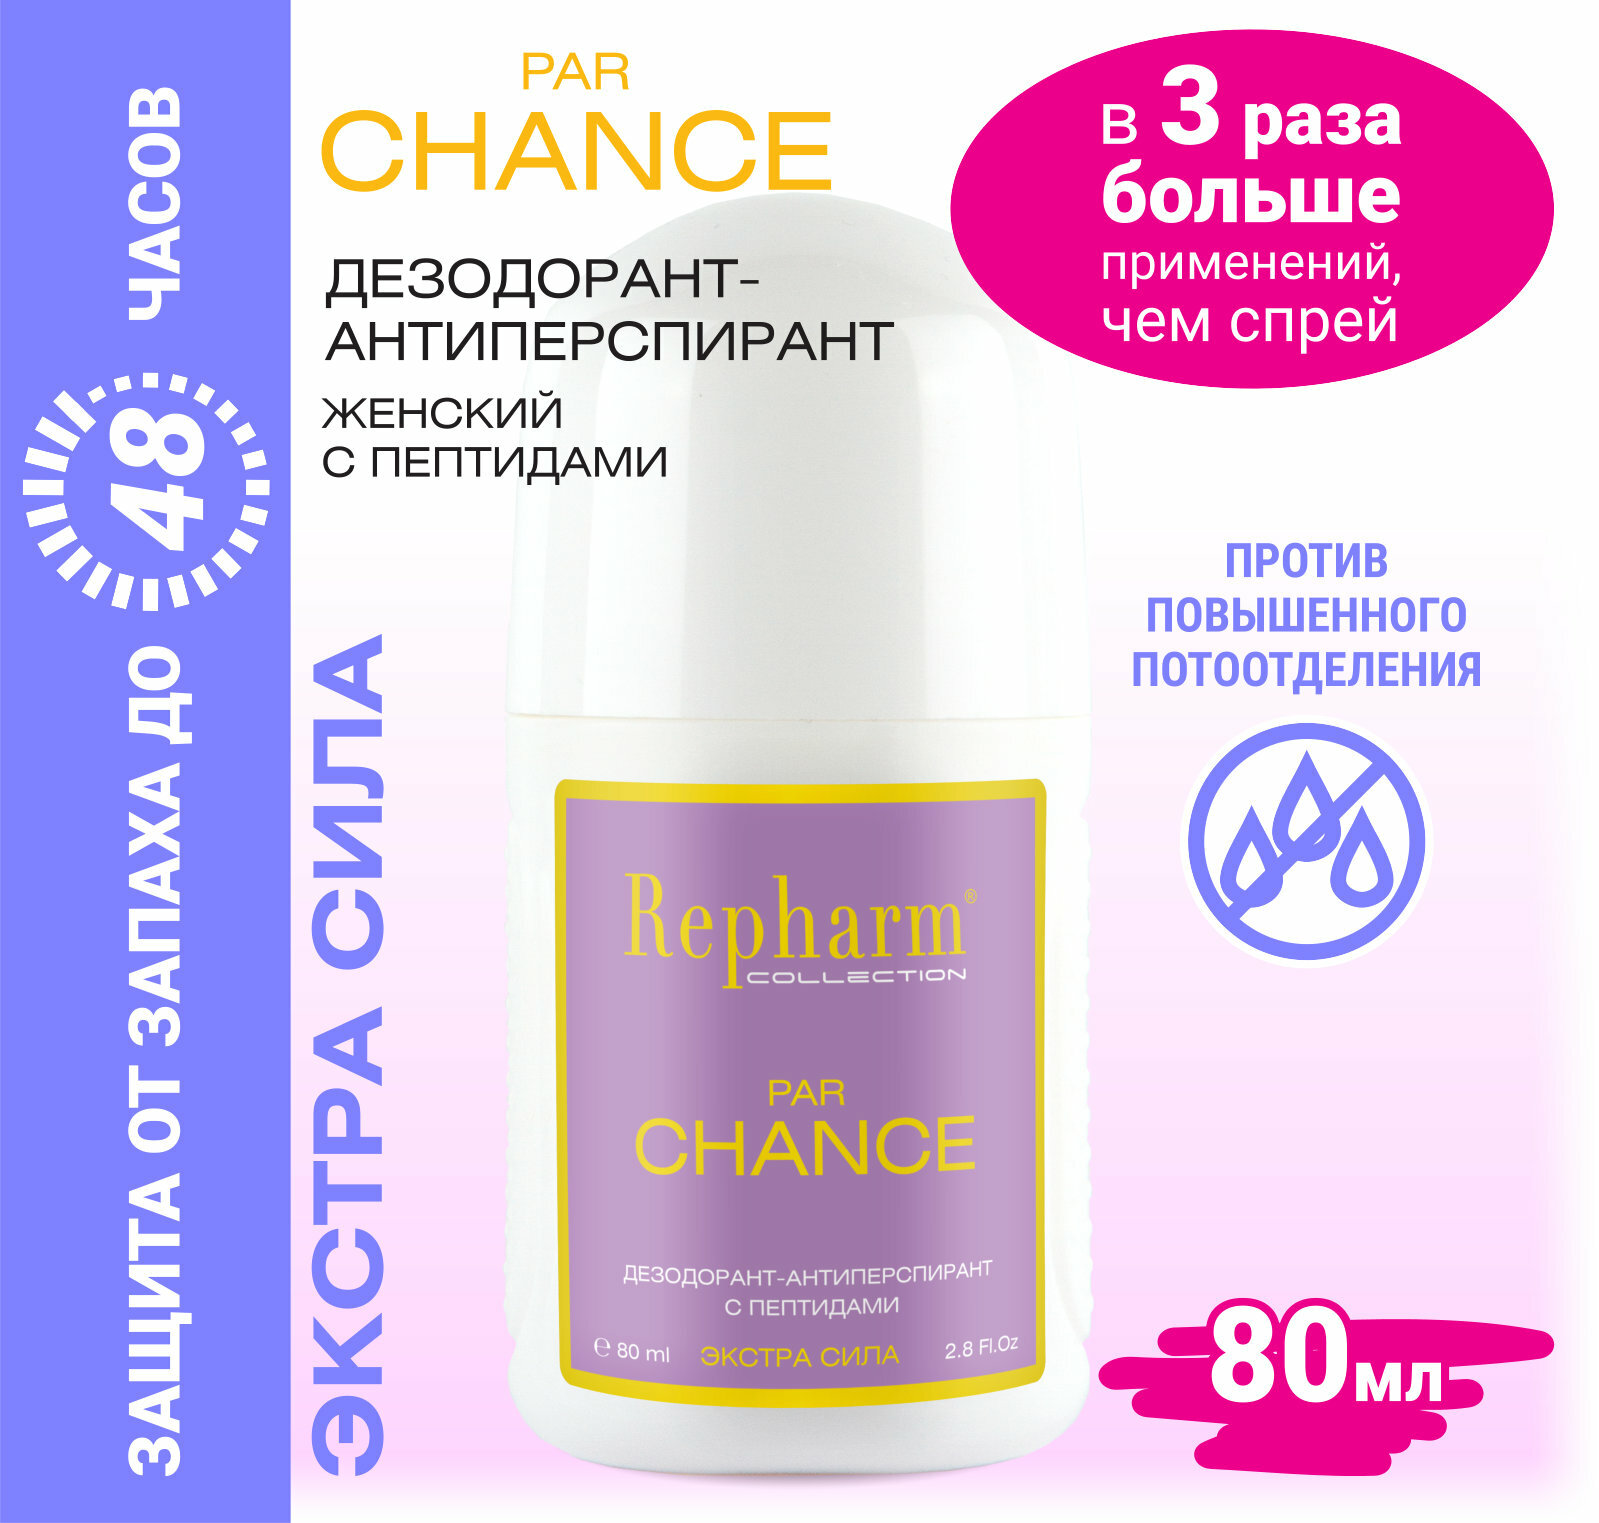 Дезодорант - антиперспирант Repharm COLLECTION Par Chance 80 мл с пептидами for women экстра сила